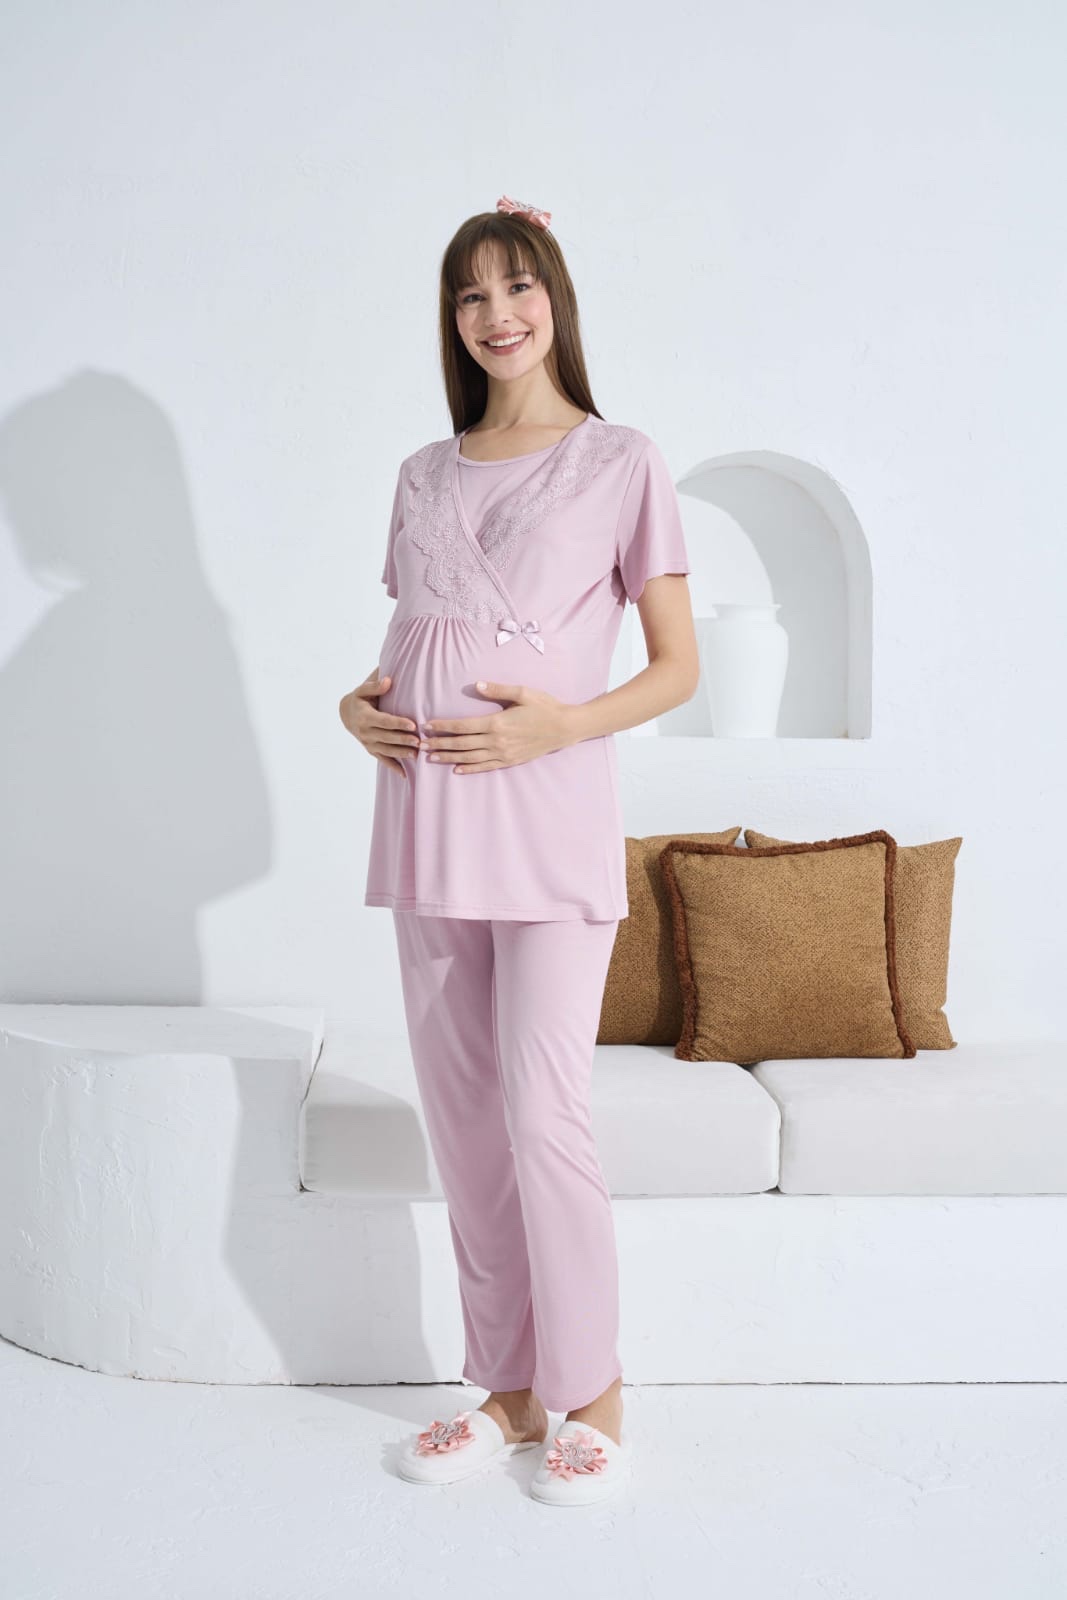 Pyjama grossesse et allaitement avec peignoire - Allobebe Maroc